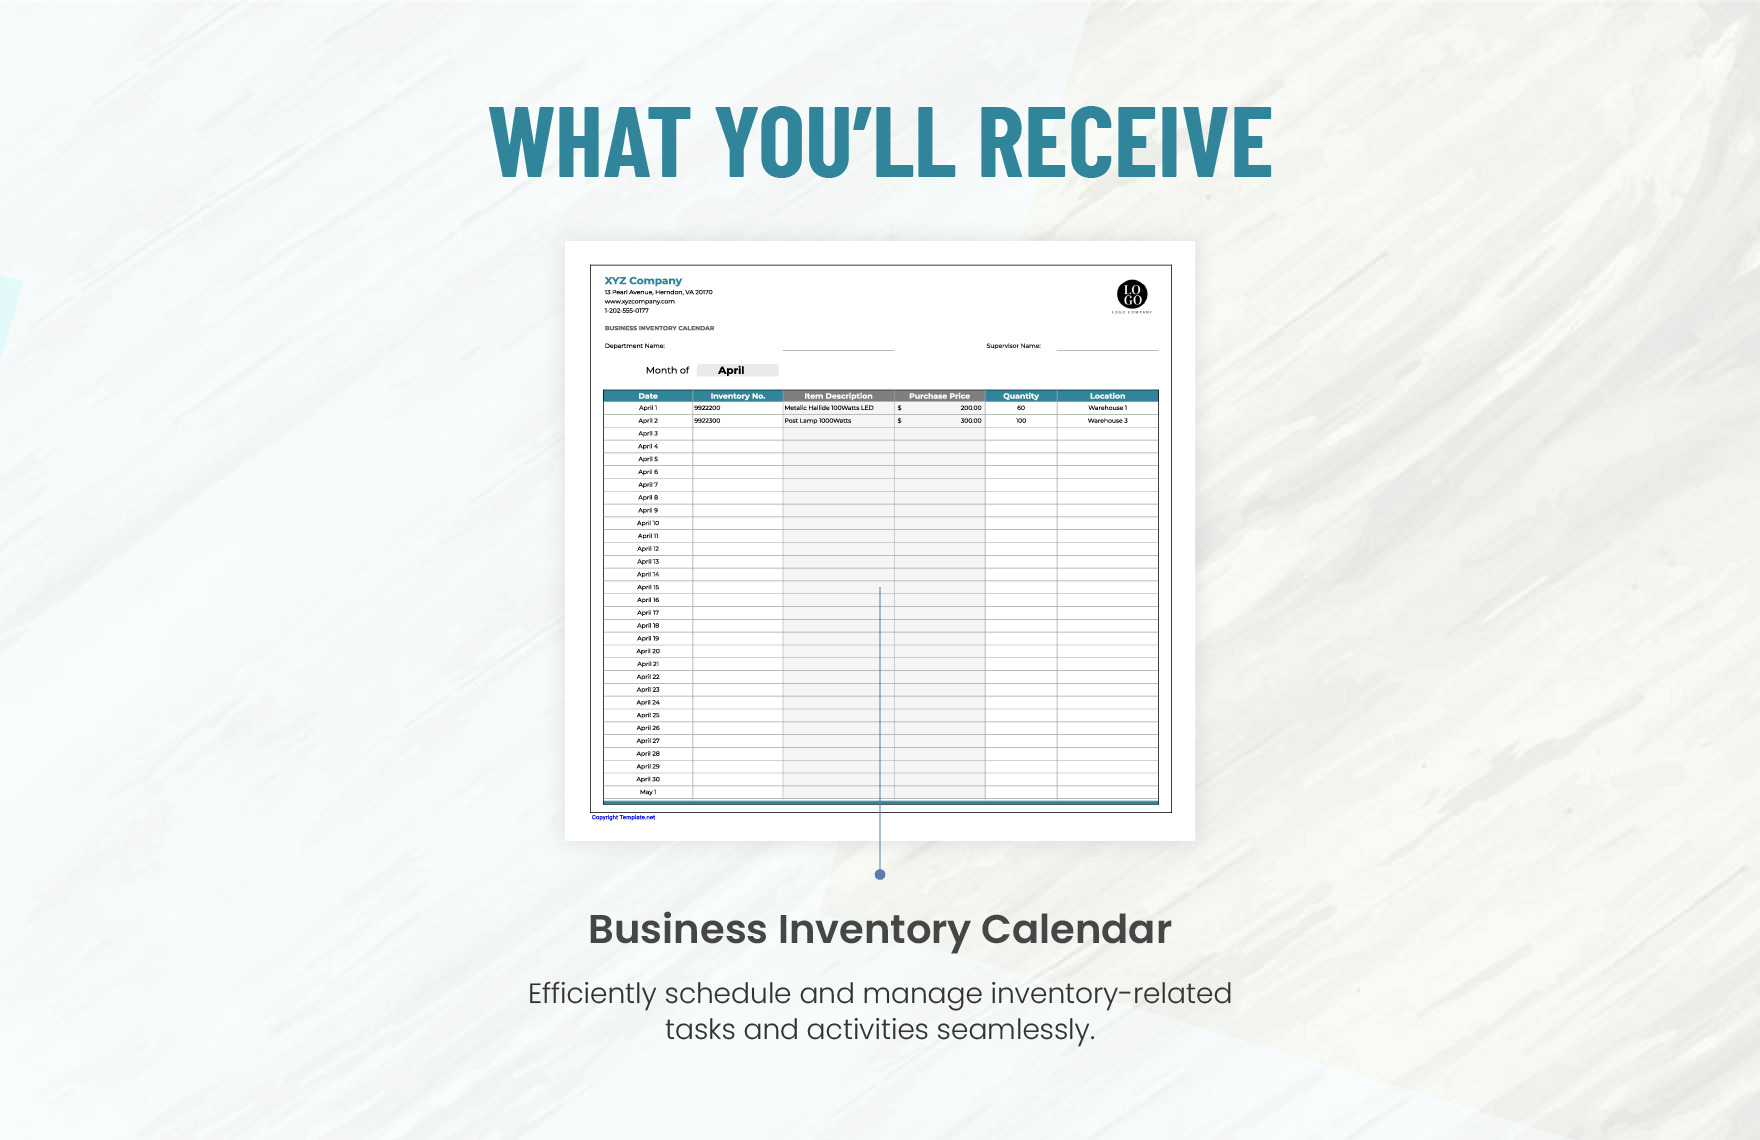 Business Inventory Calendar Template